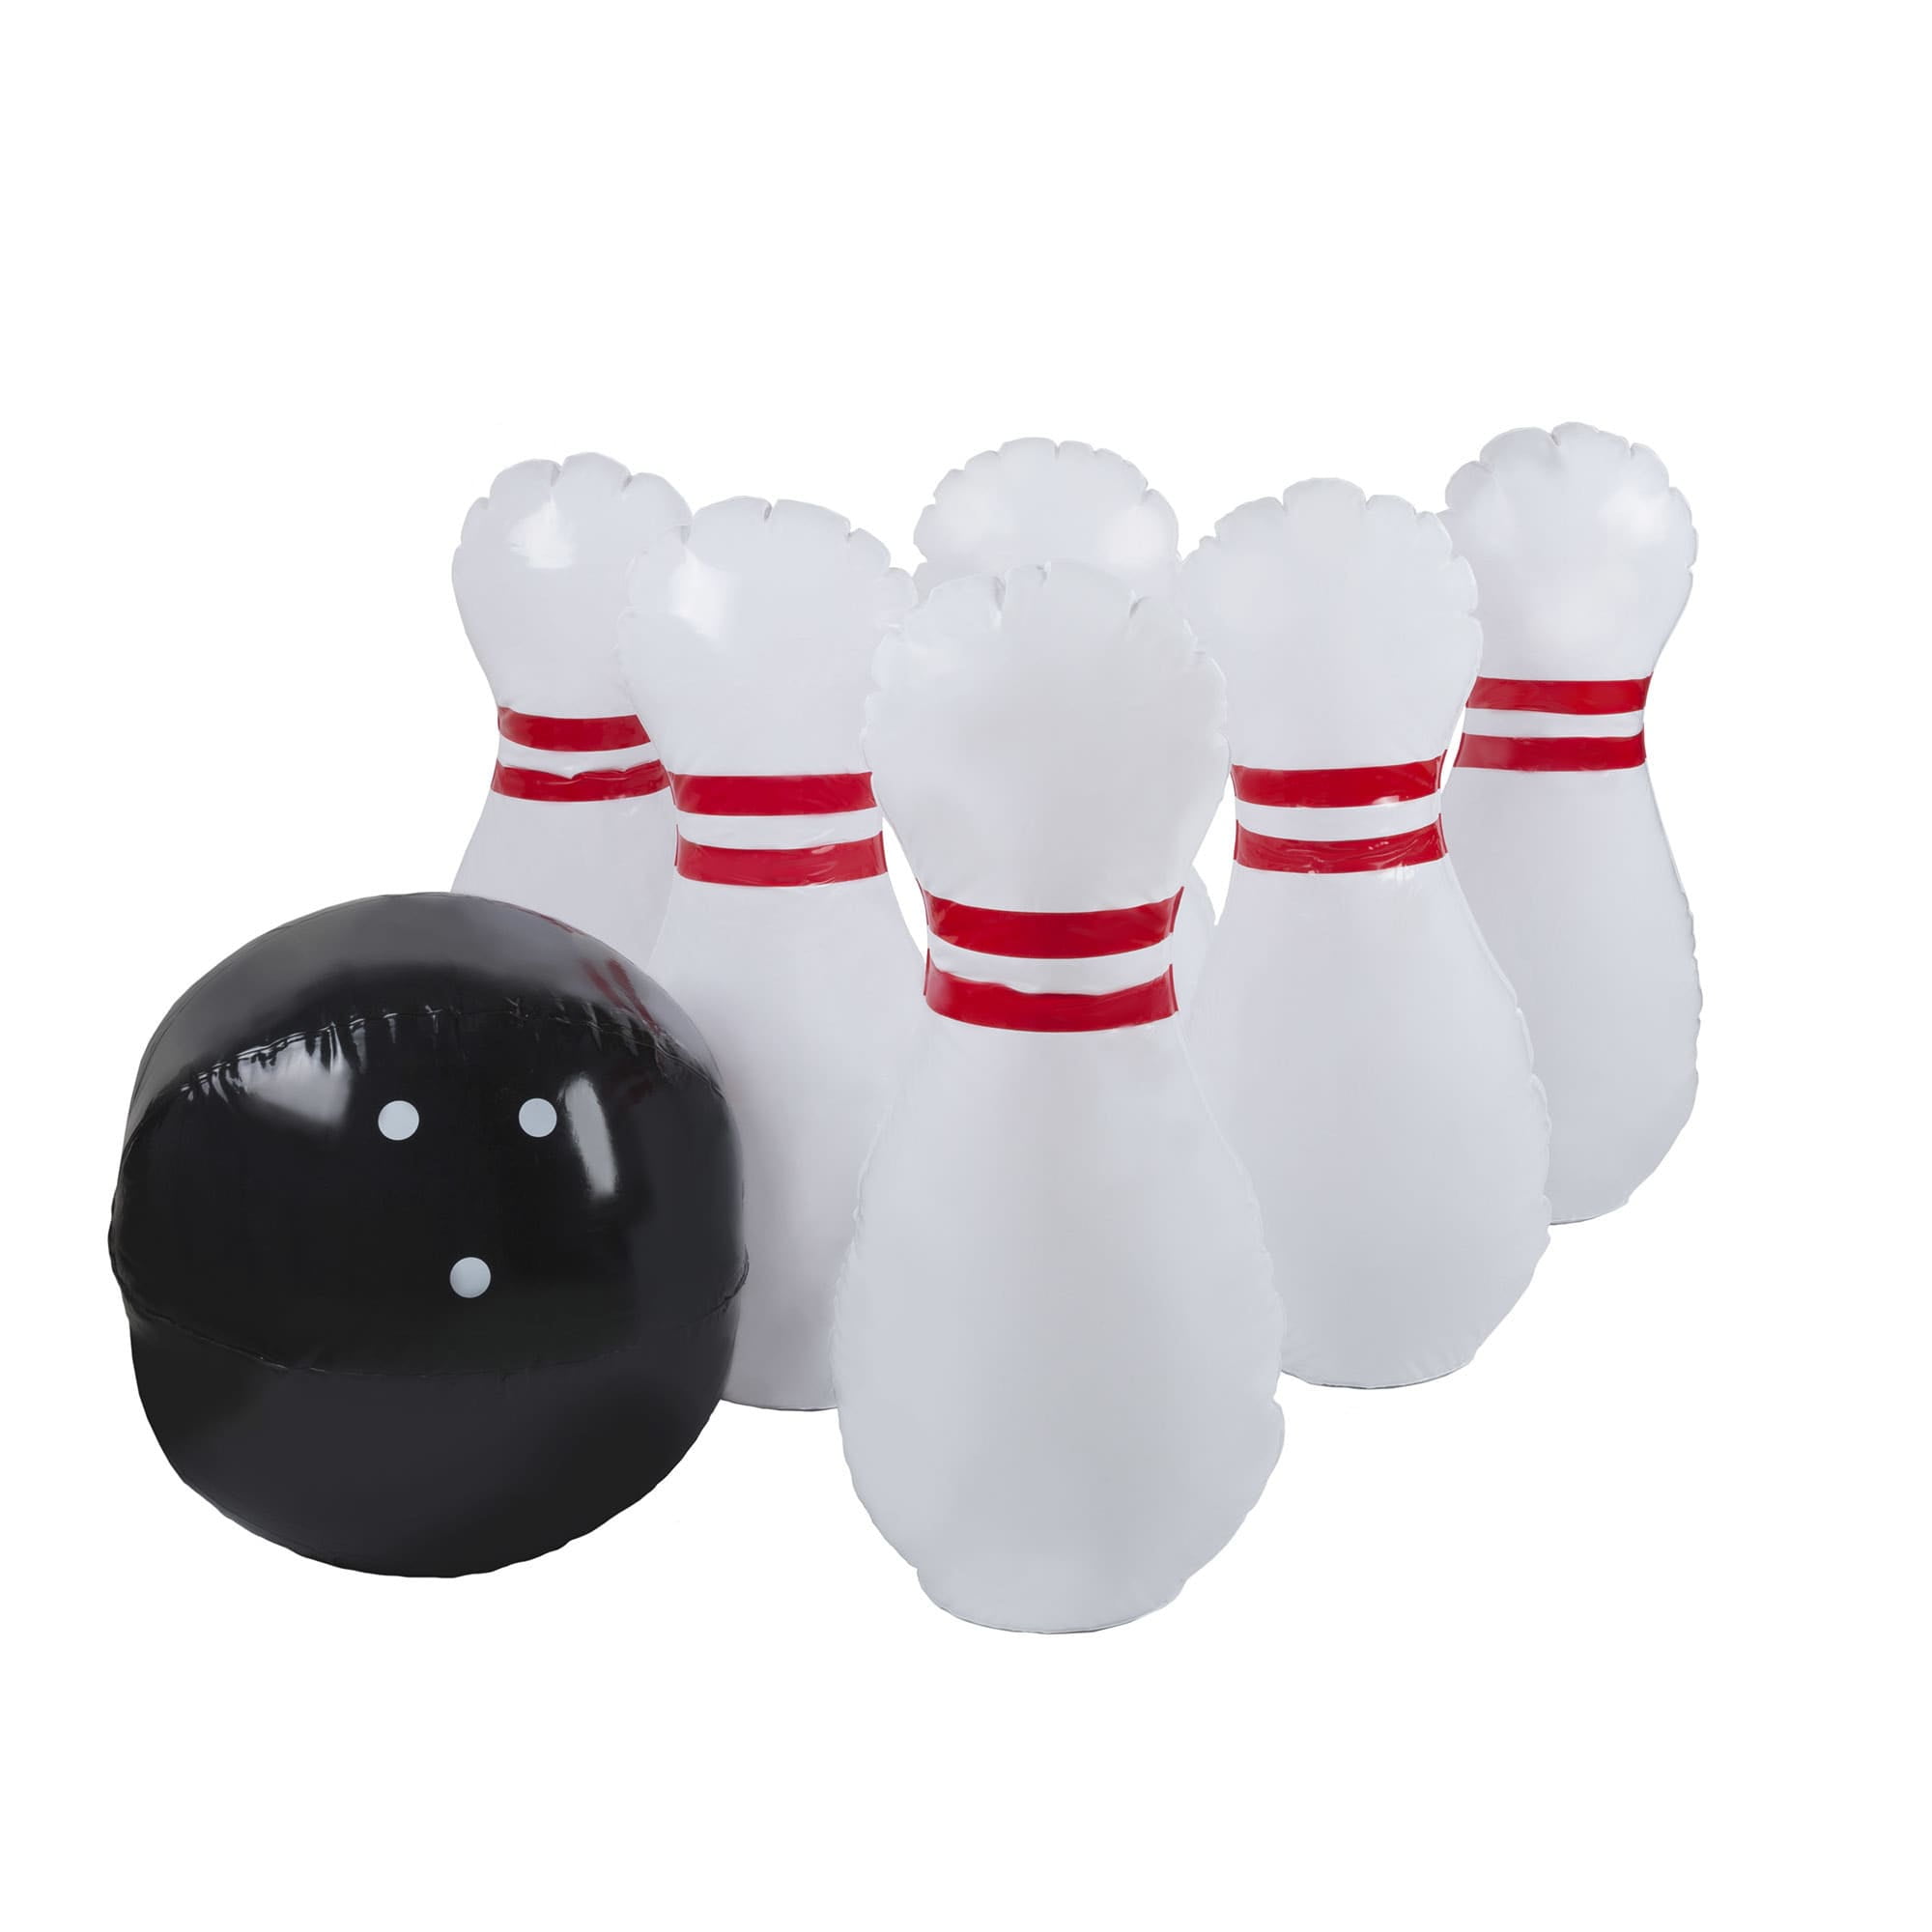 walmart jumbo bowling set